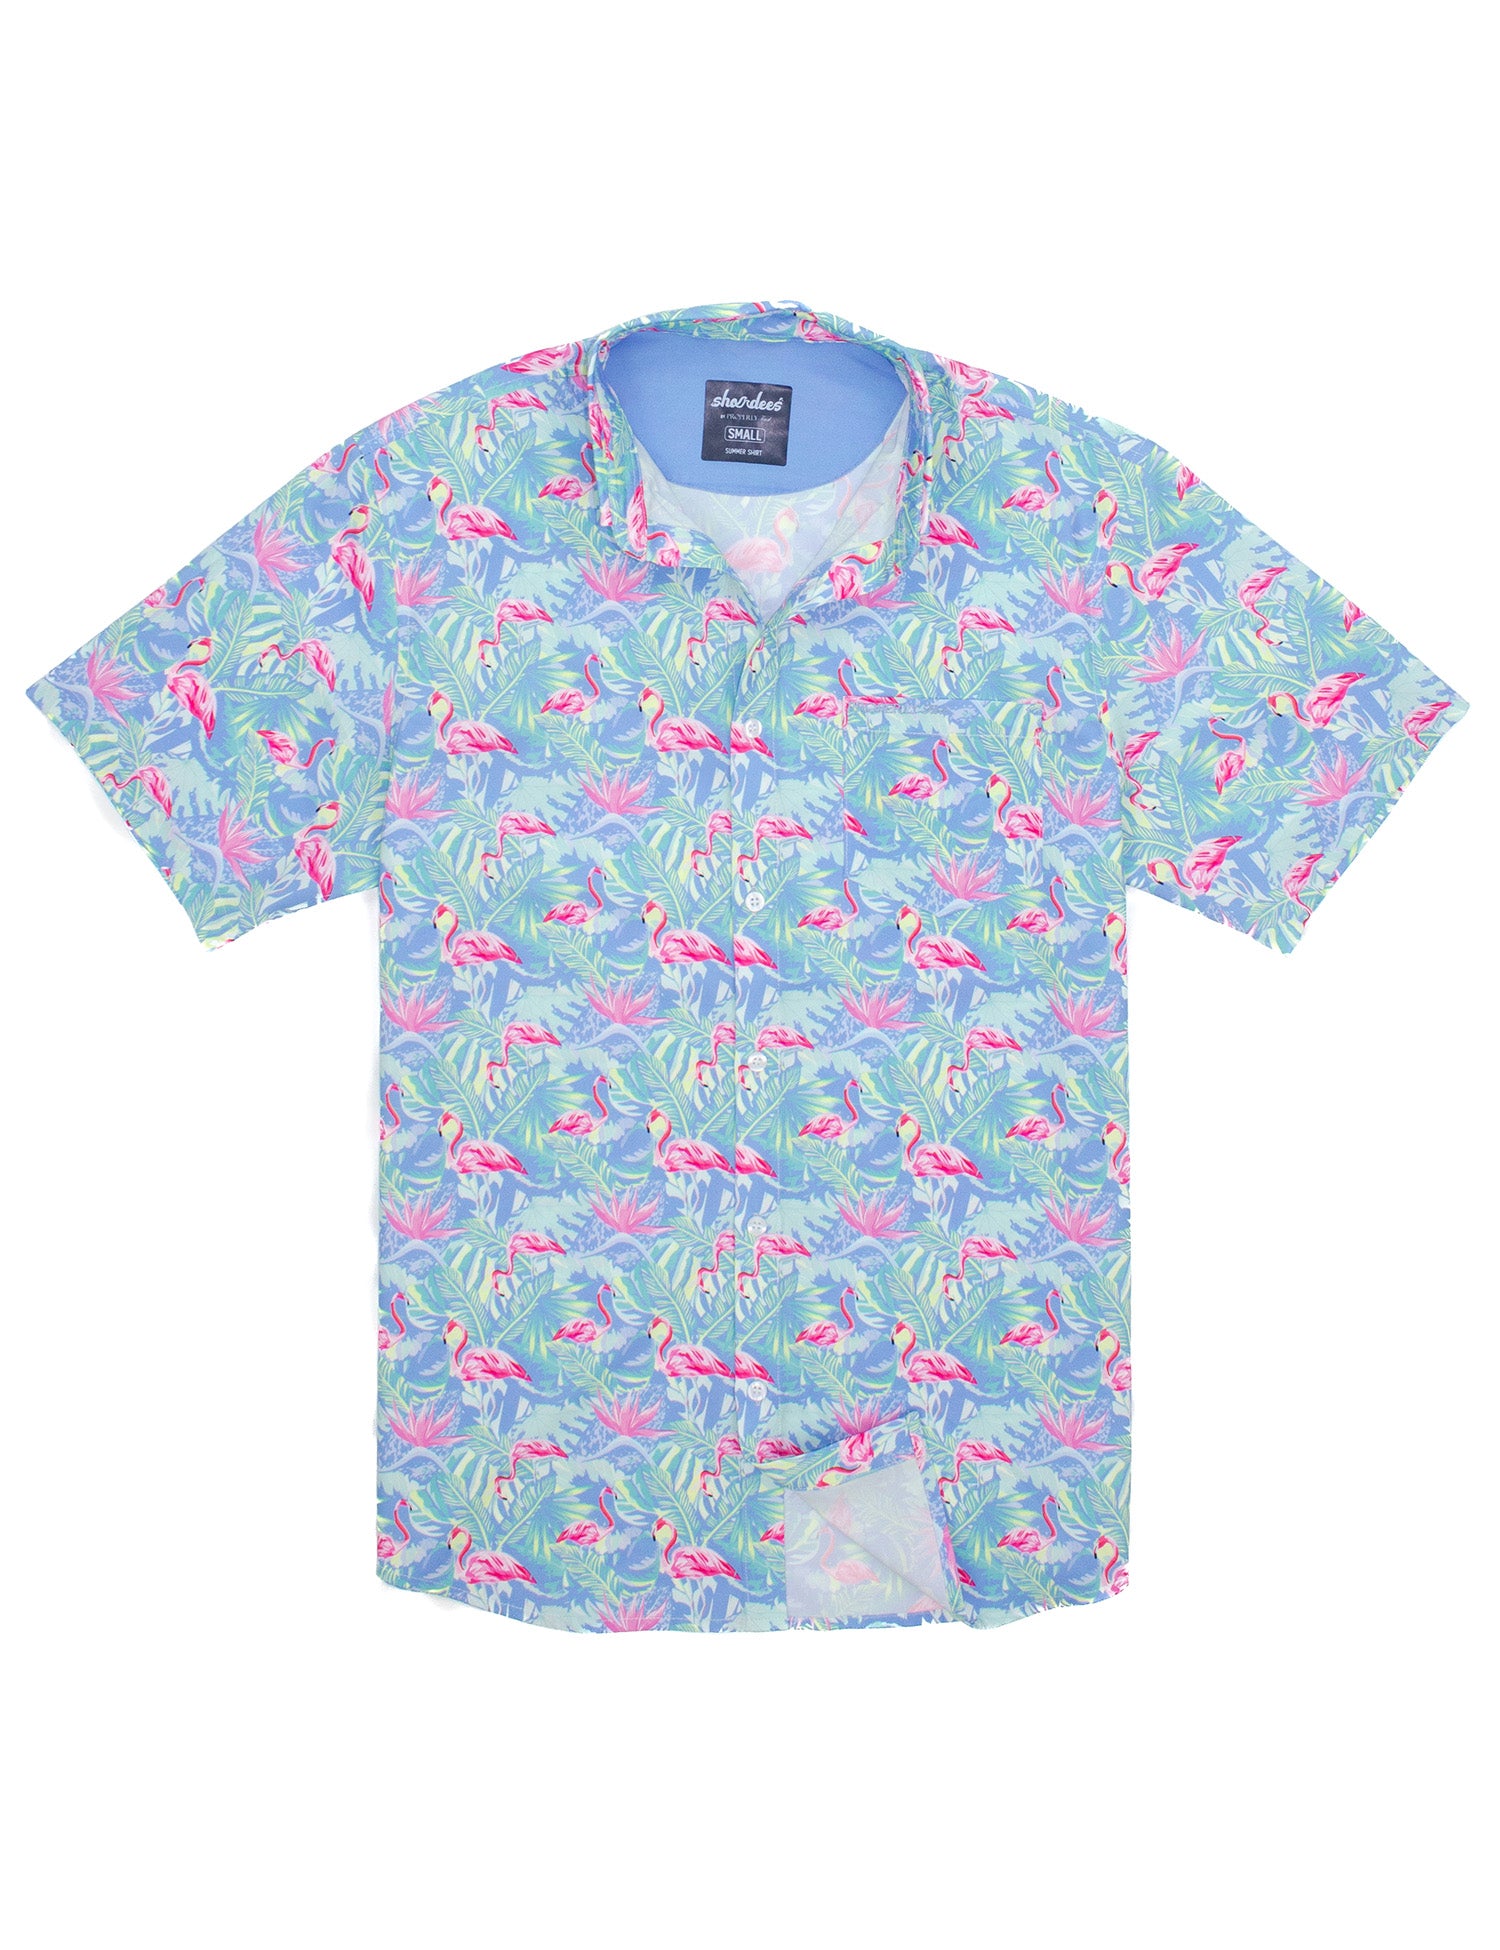 Shordees Summer Shirt Floral Flamingo